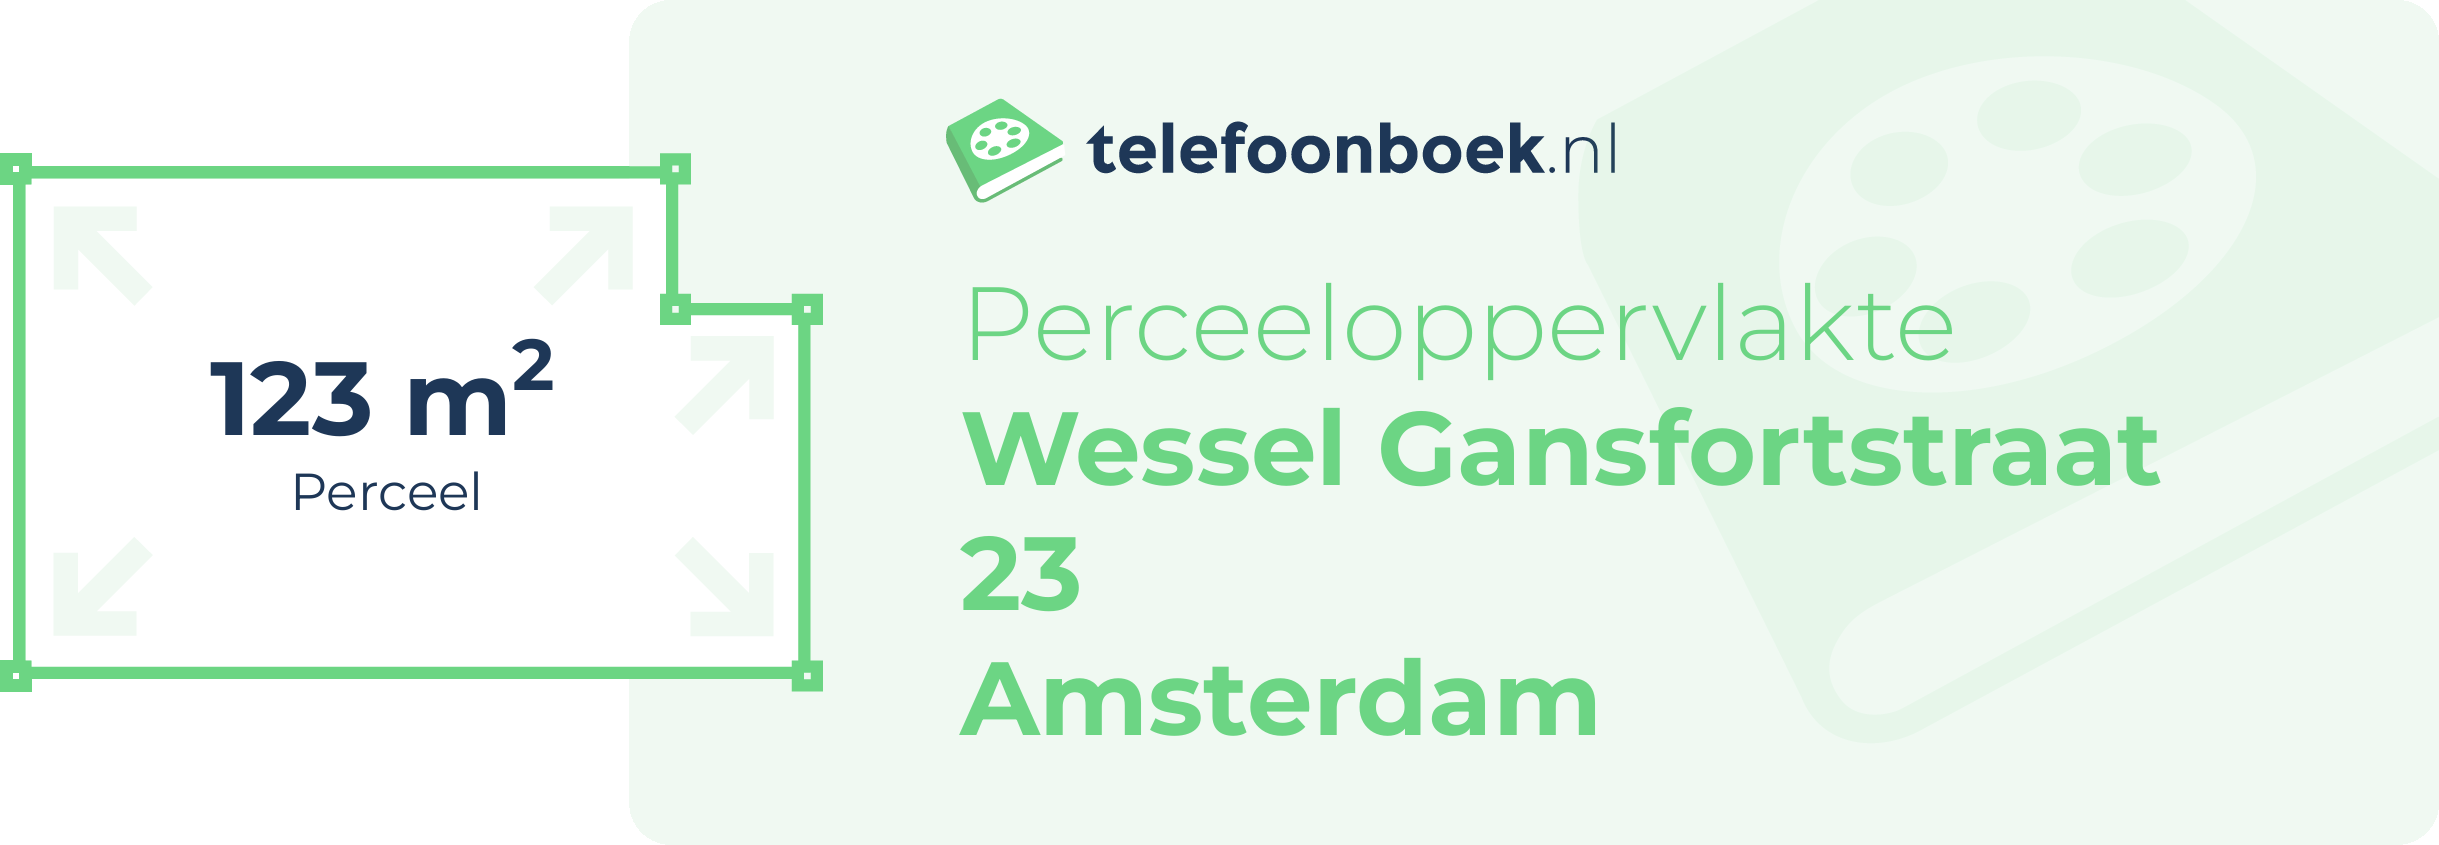 Perceeloppervlakte Wessel Gansfortstraat 23 Amsterdam